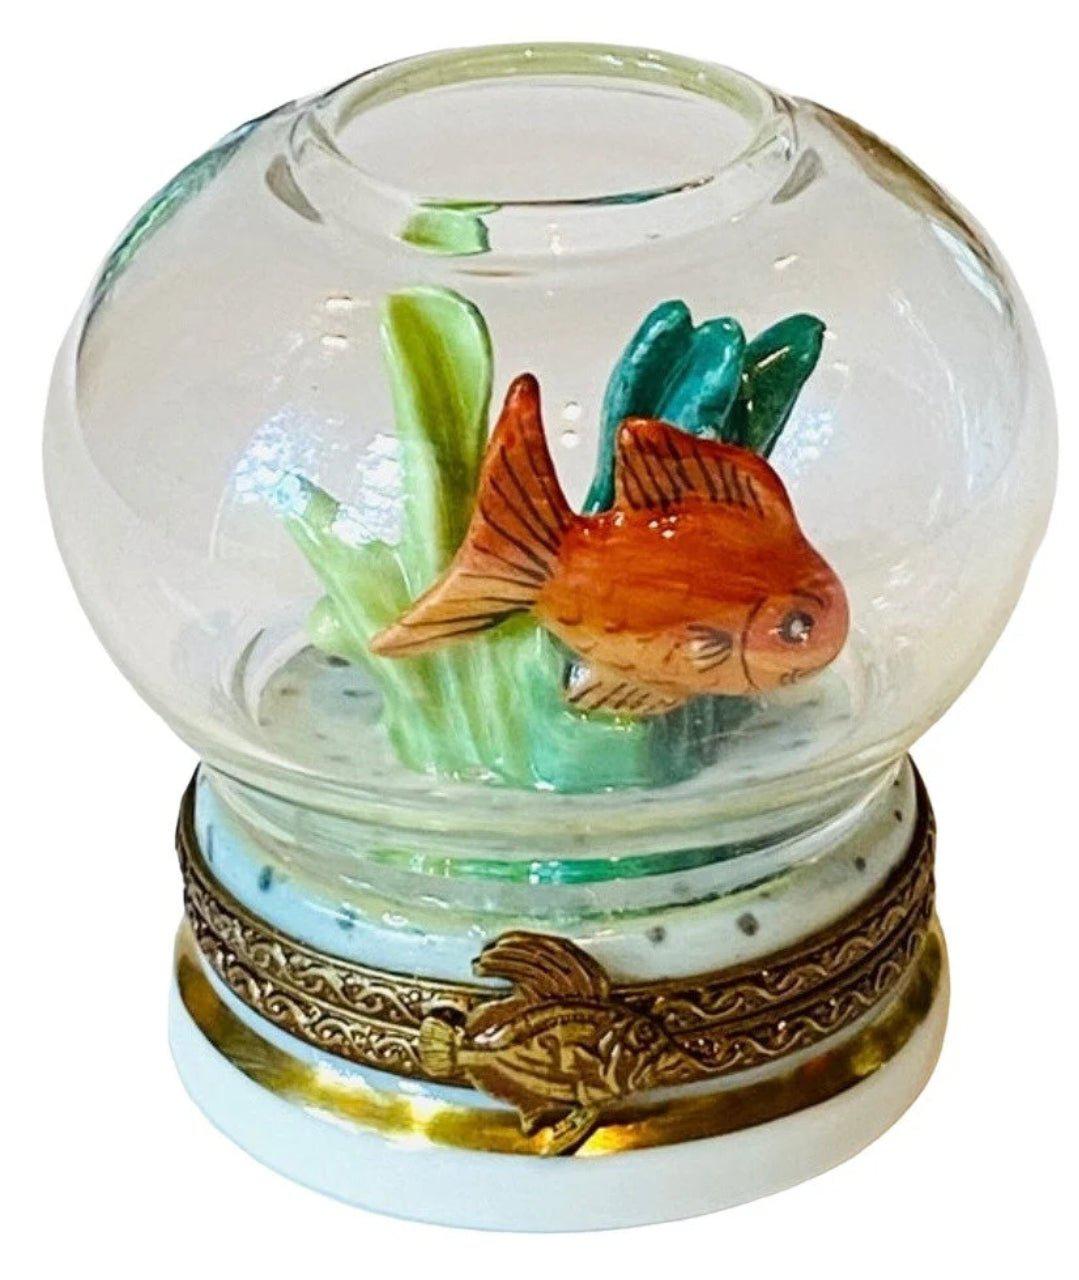 Gold Fish in Bowl - Premium Quality Pet Fish for Home Aquariums - Limoges  Box